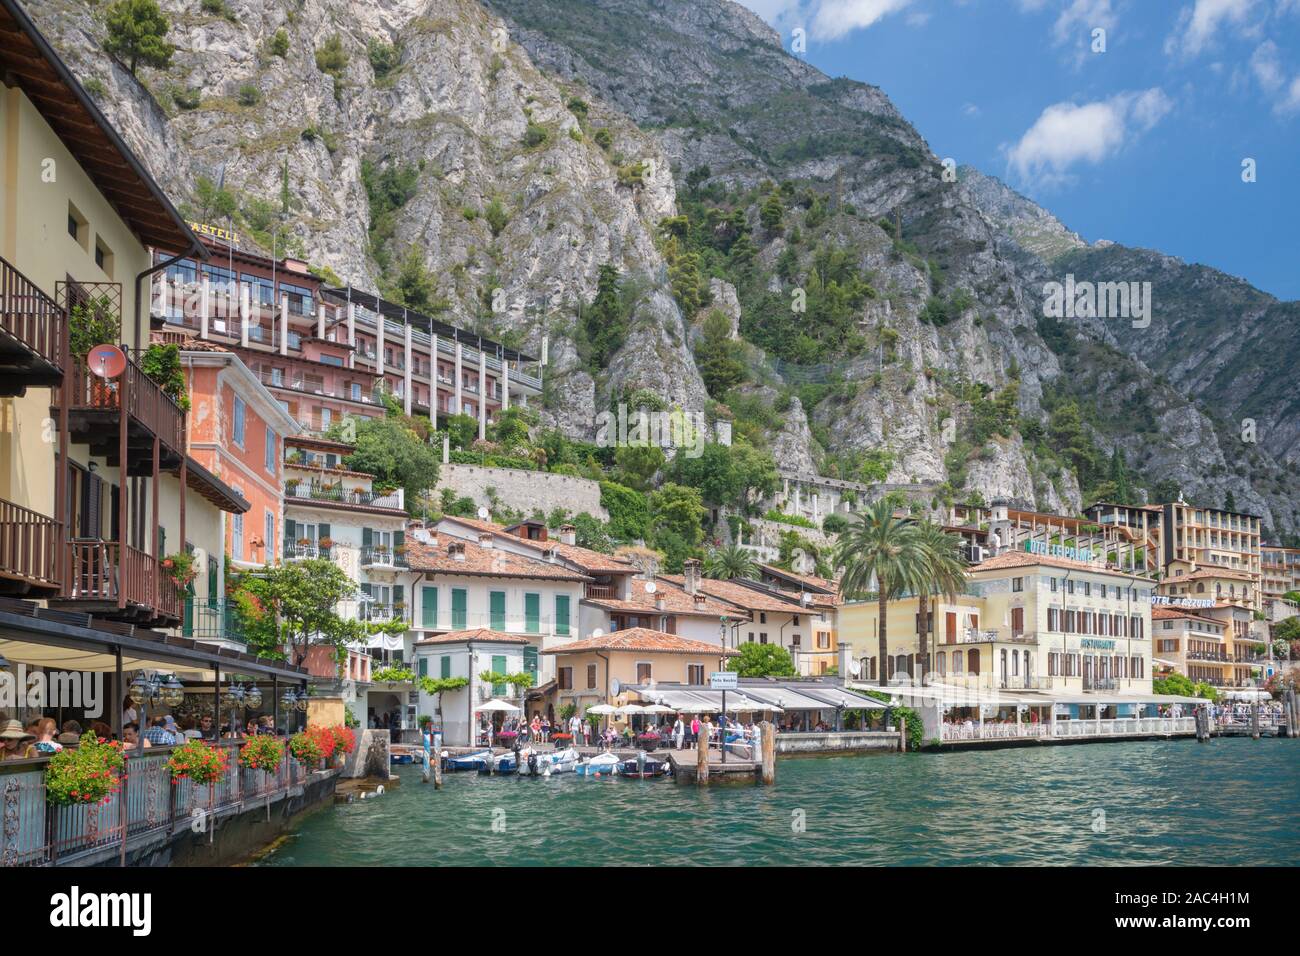 LIMONE SUL GARDA, ITALY - JUNE 13, 2019: The little town under the alps rocks. Stock Photo